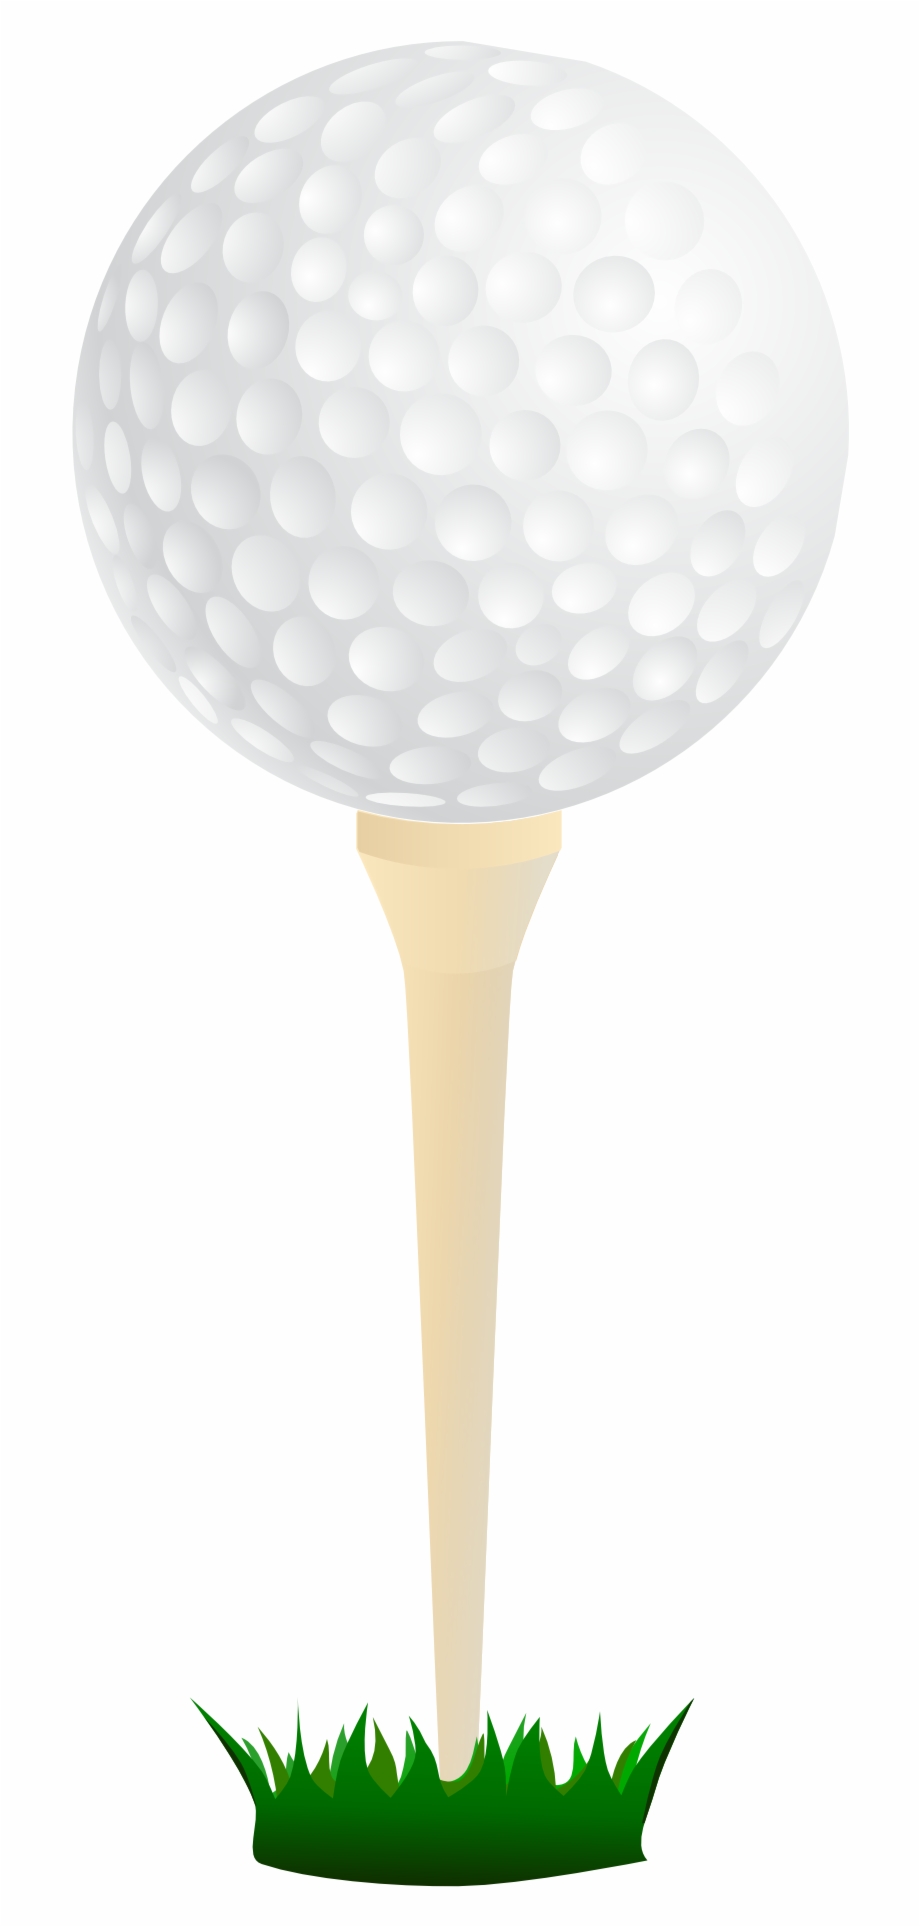 clip art golf ball on tee
